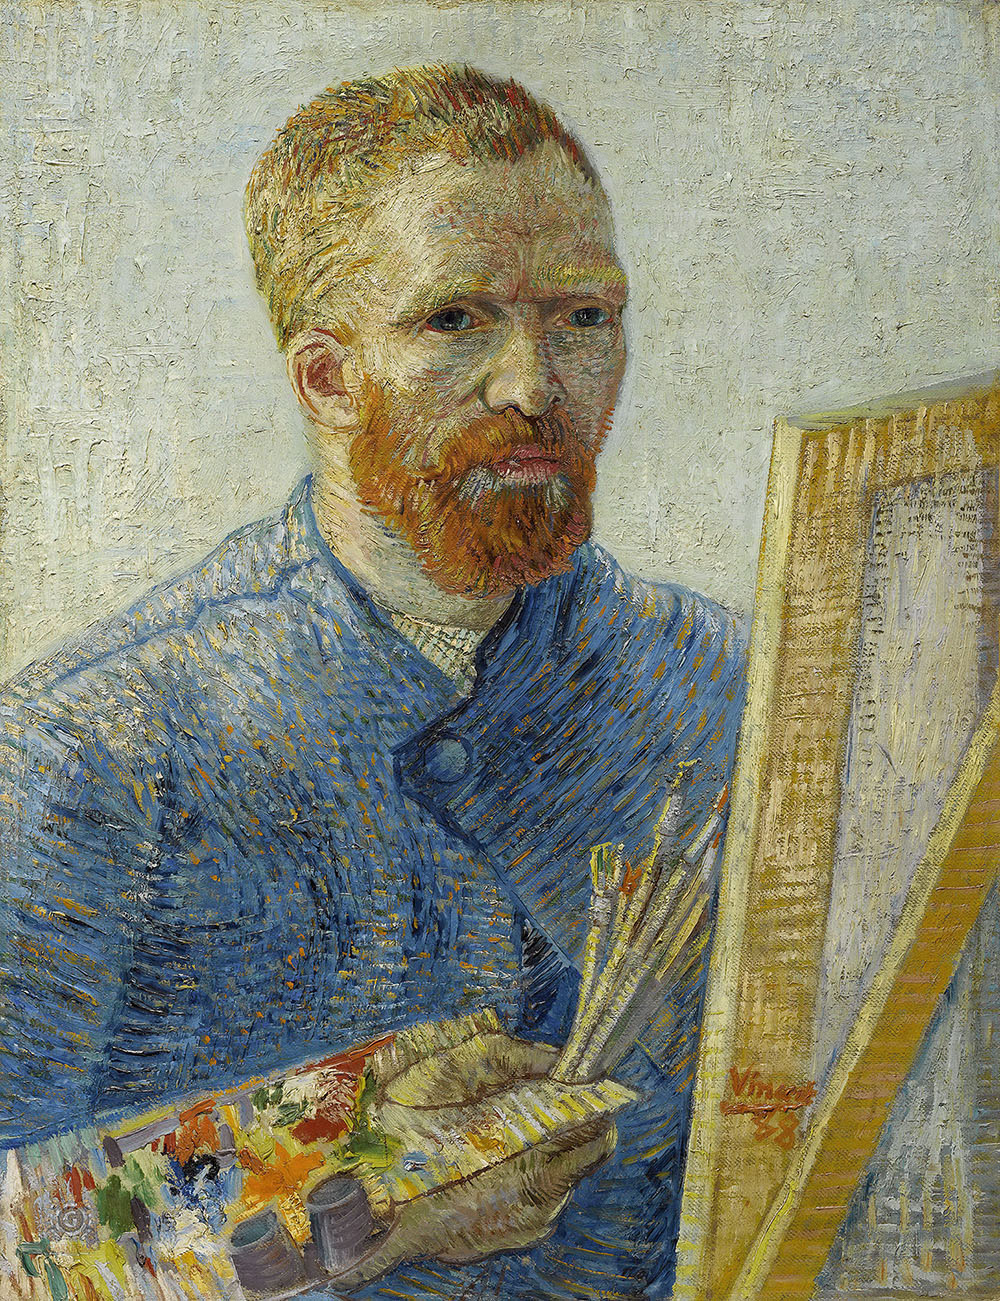 Винсент Ван Гог. "Автопортрет у мольберта". 1888. Музей Ван Гога, Амстердам.